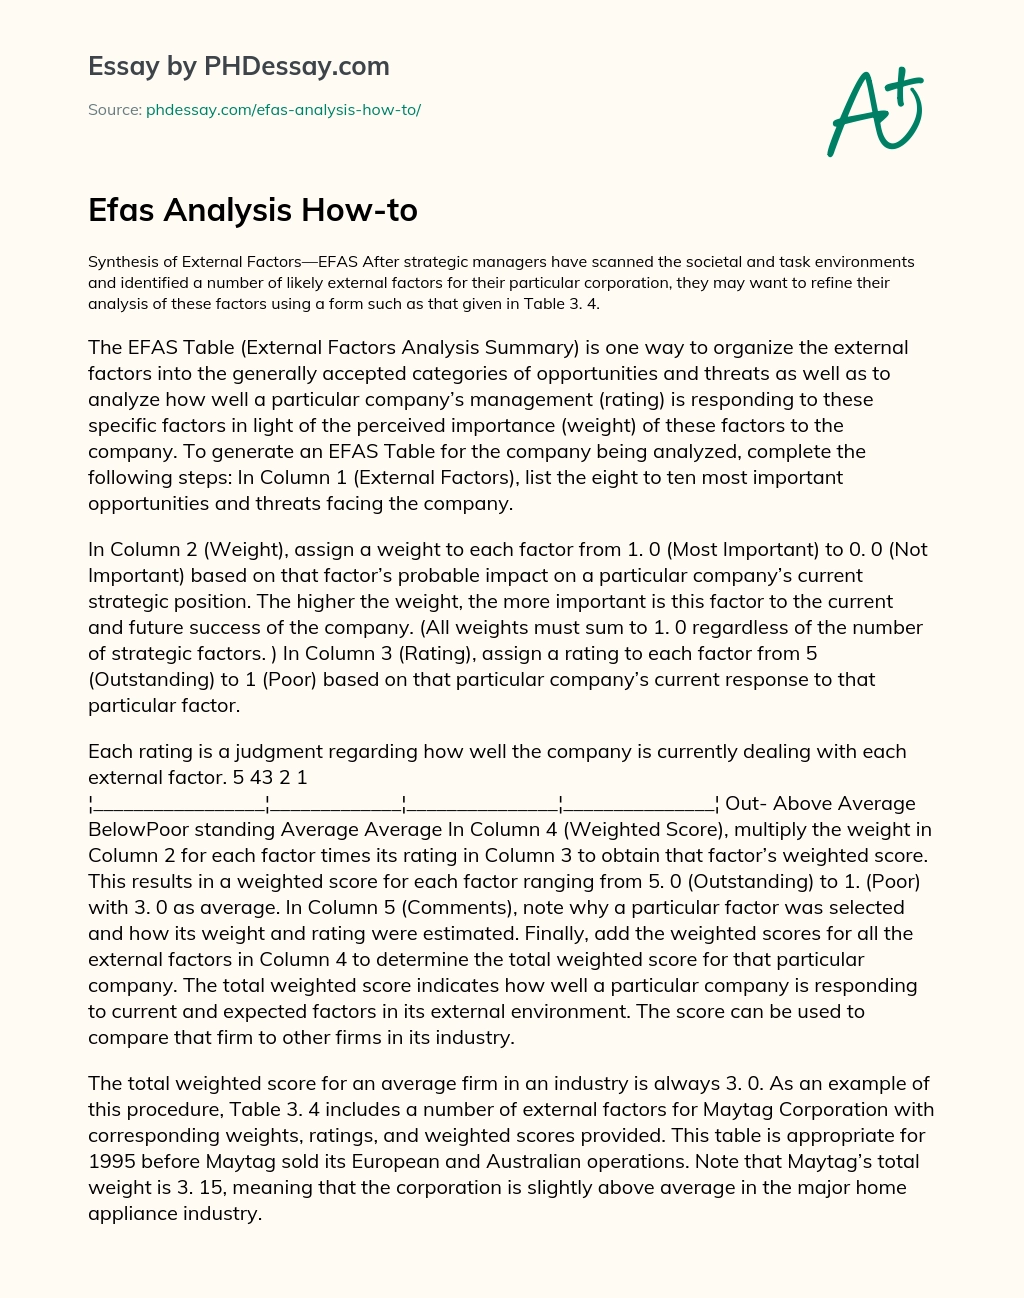 Efas Analysis How-to essay